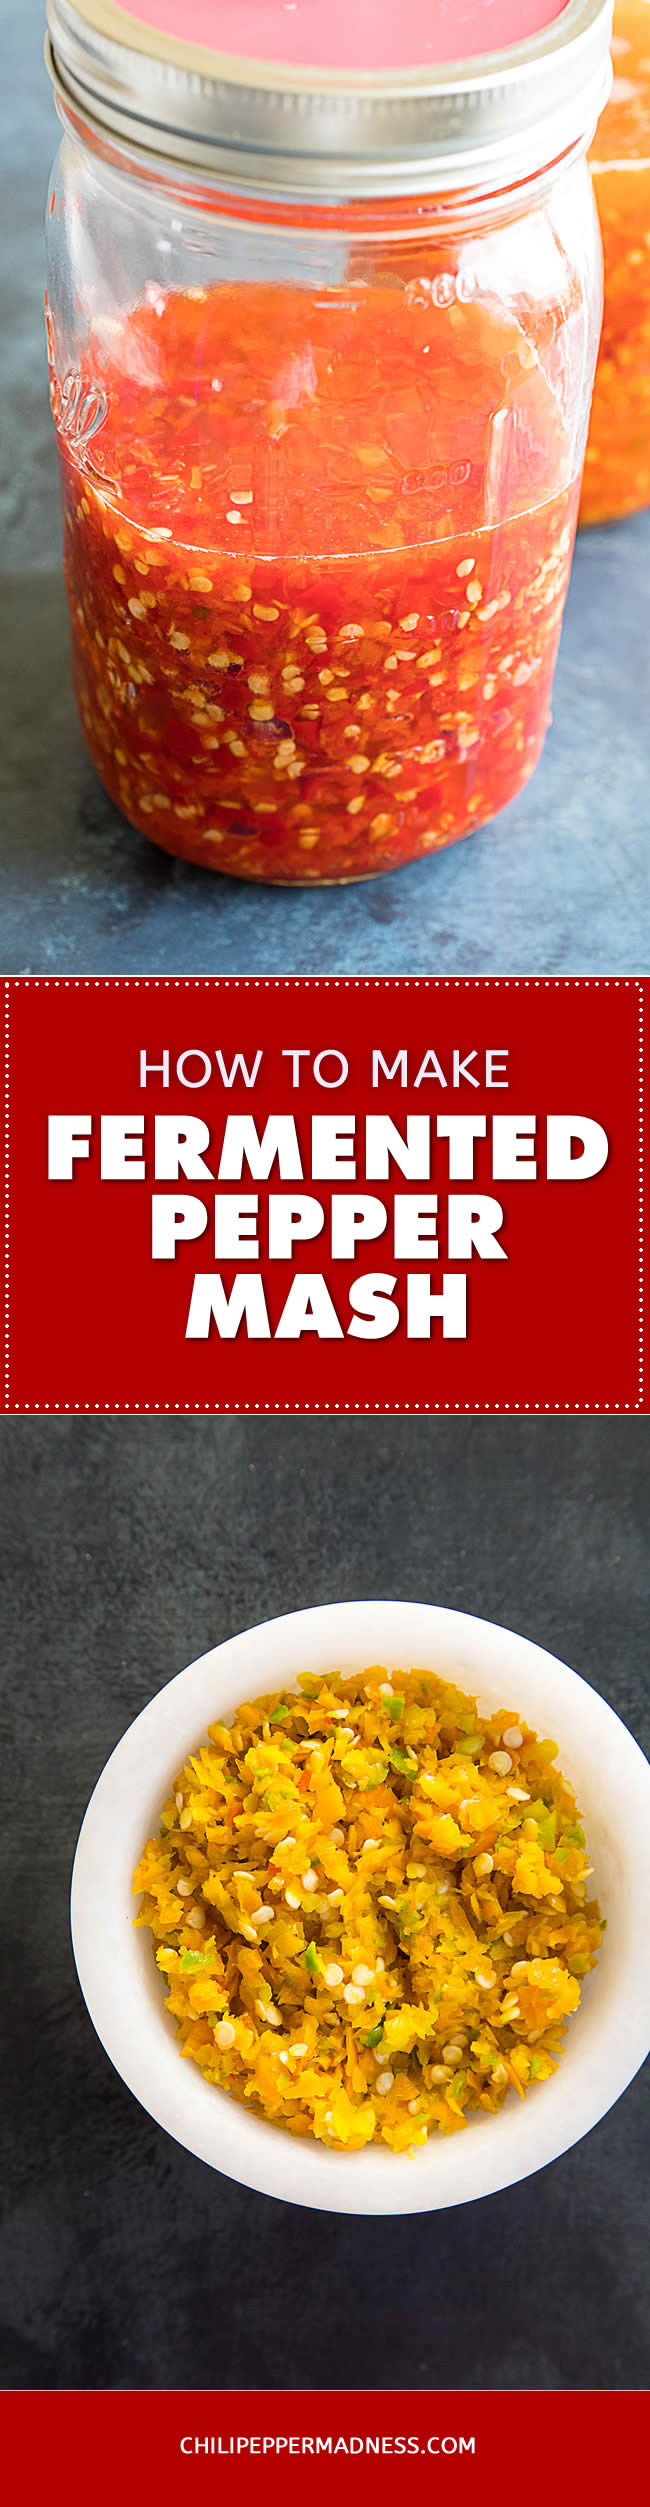 How to Make Fermented Pepper Mash 